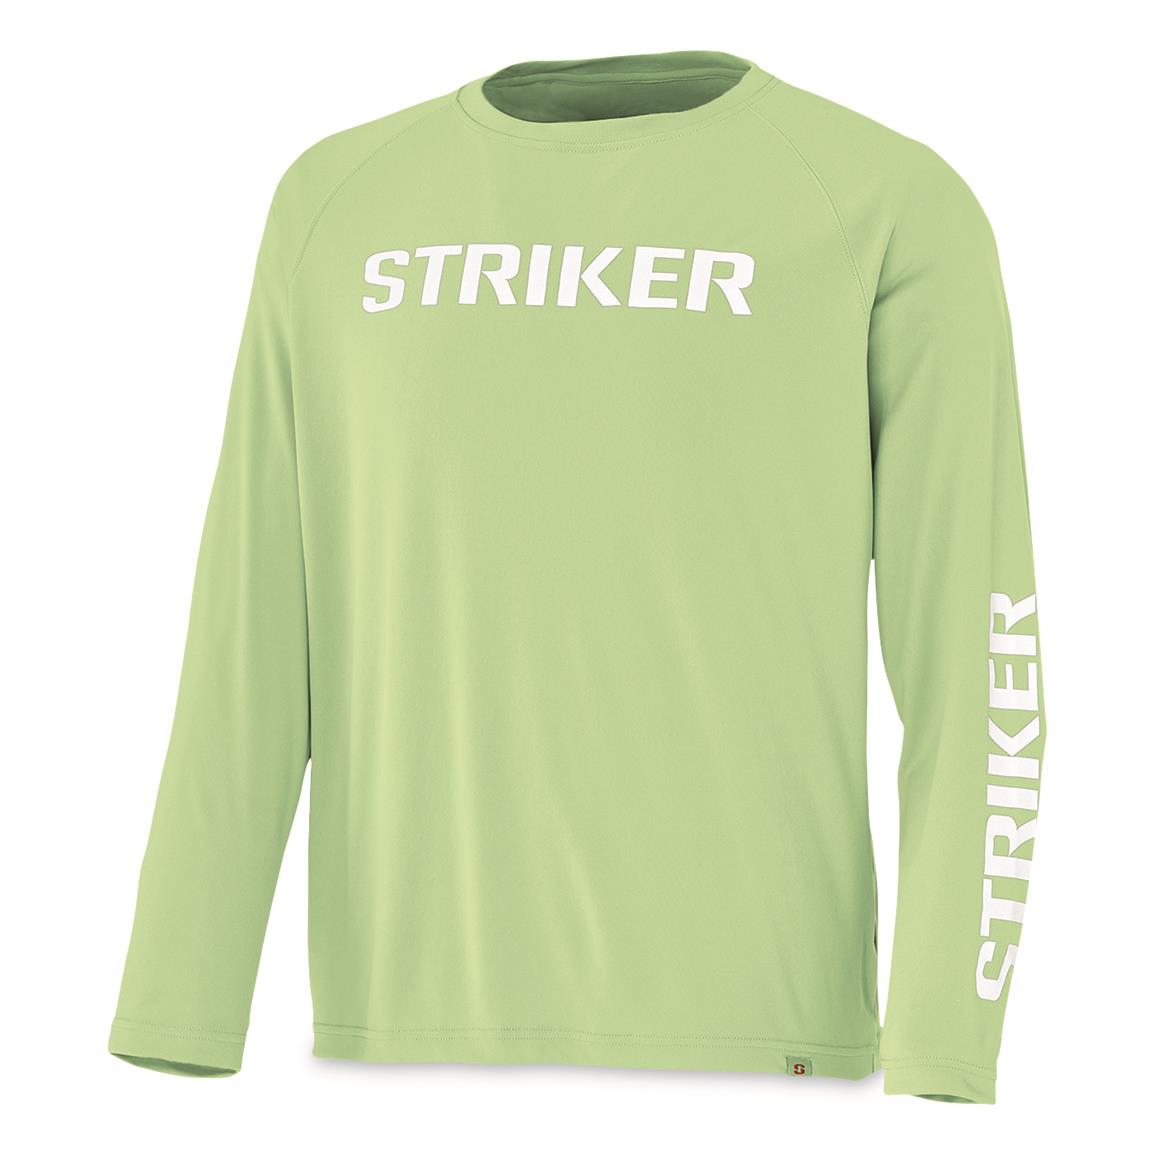 Striker Men's Swagger UPF Long Sleeve Shirt, Mean Green